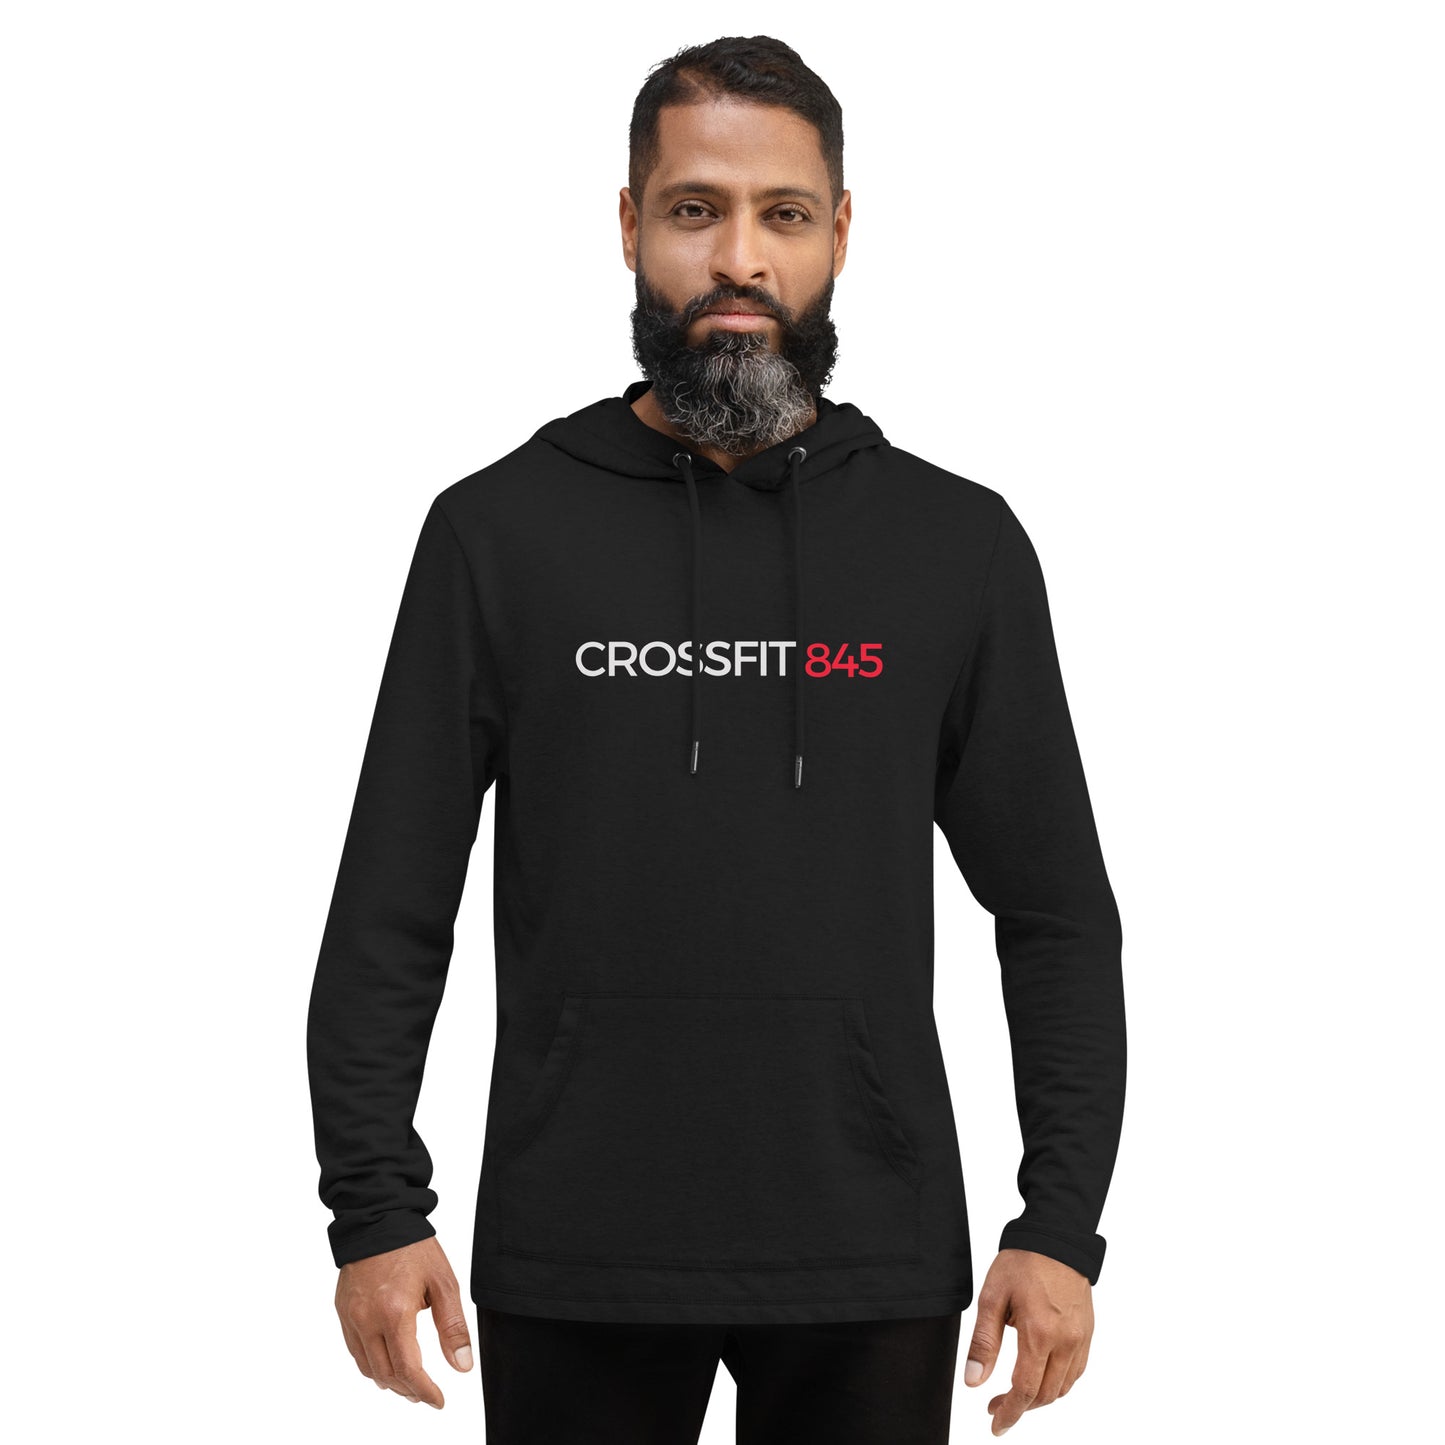 CrossFit 845 Unisex Lightweight Hoodie